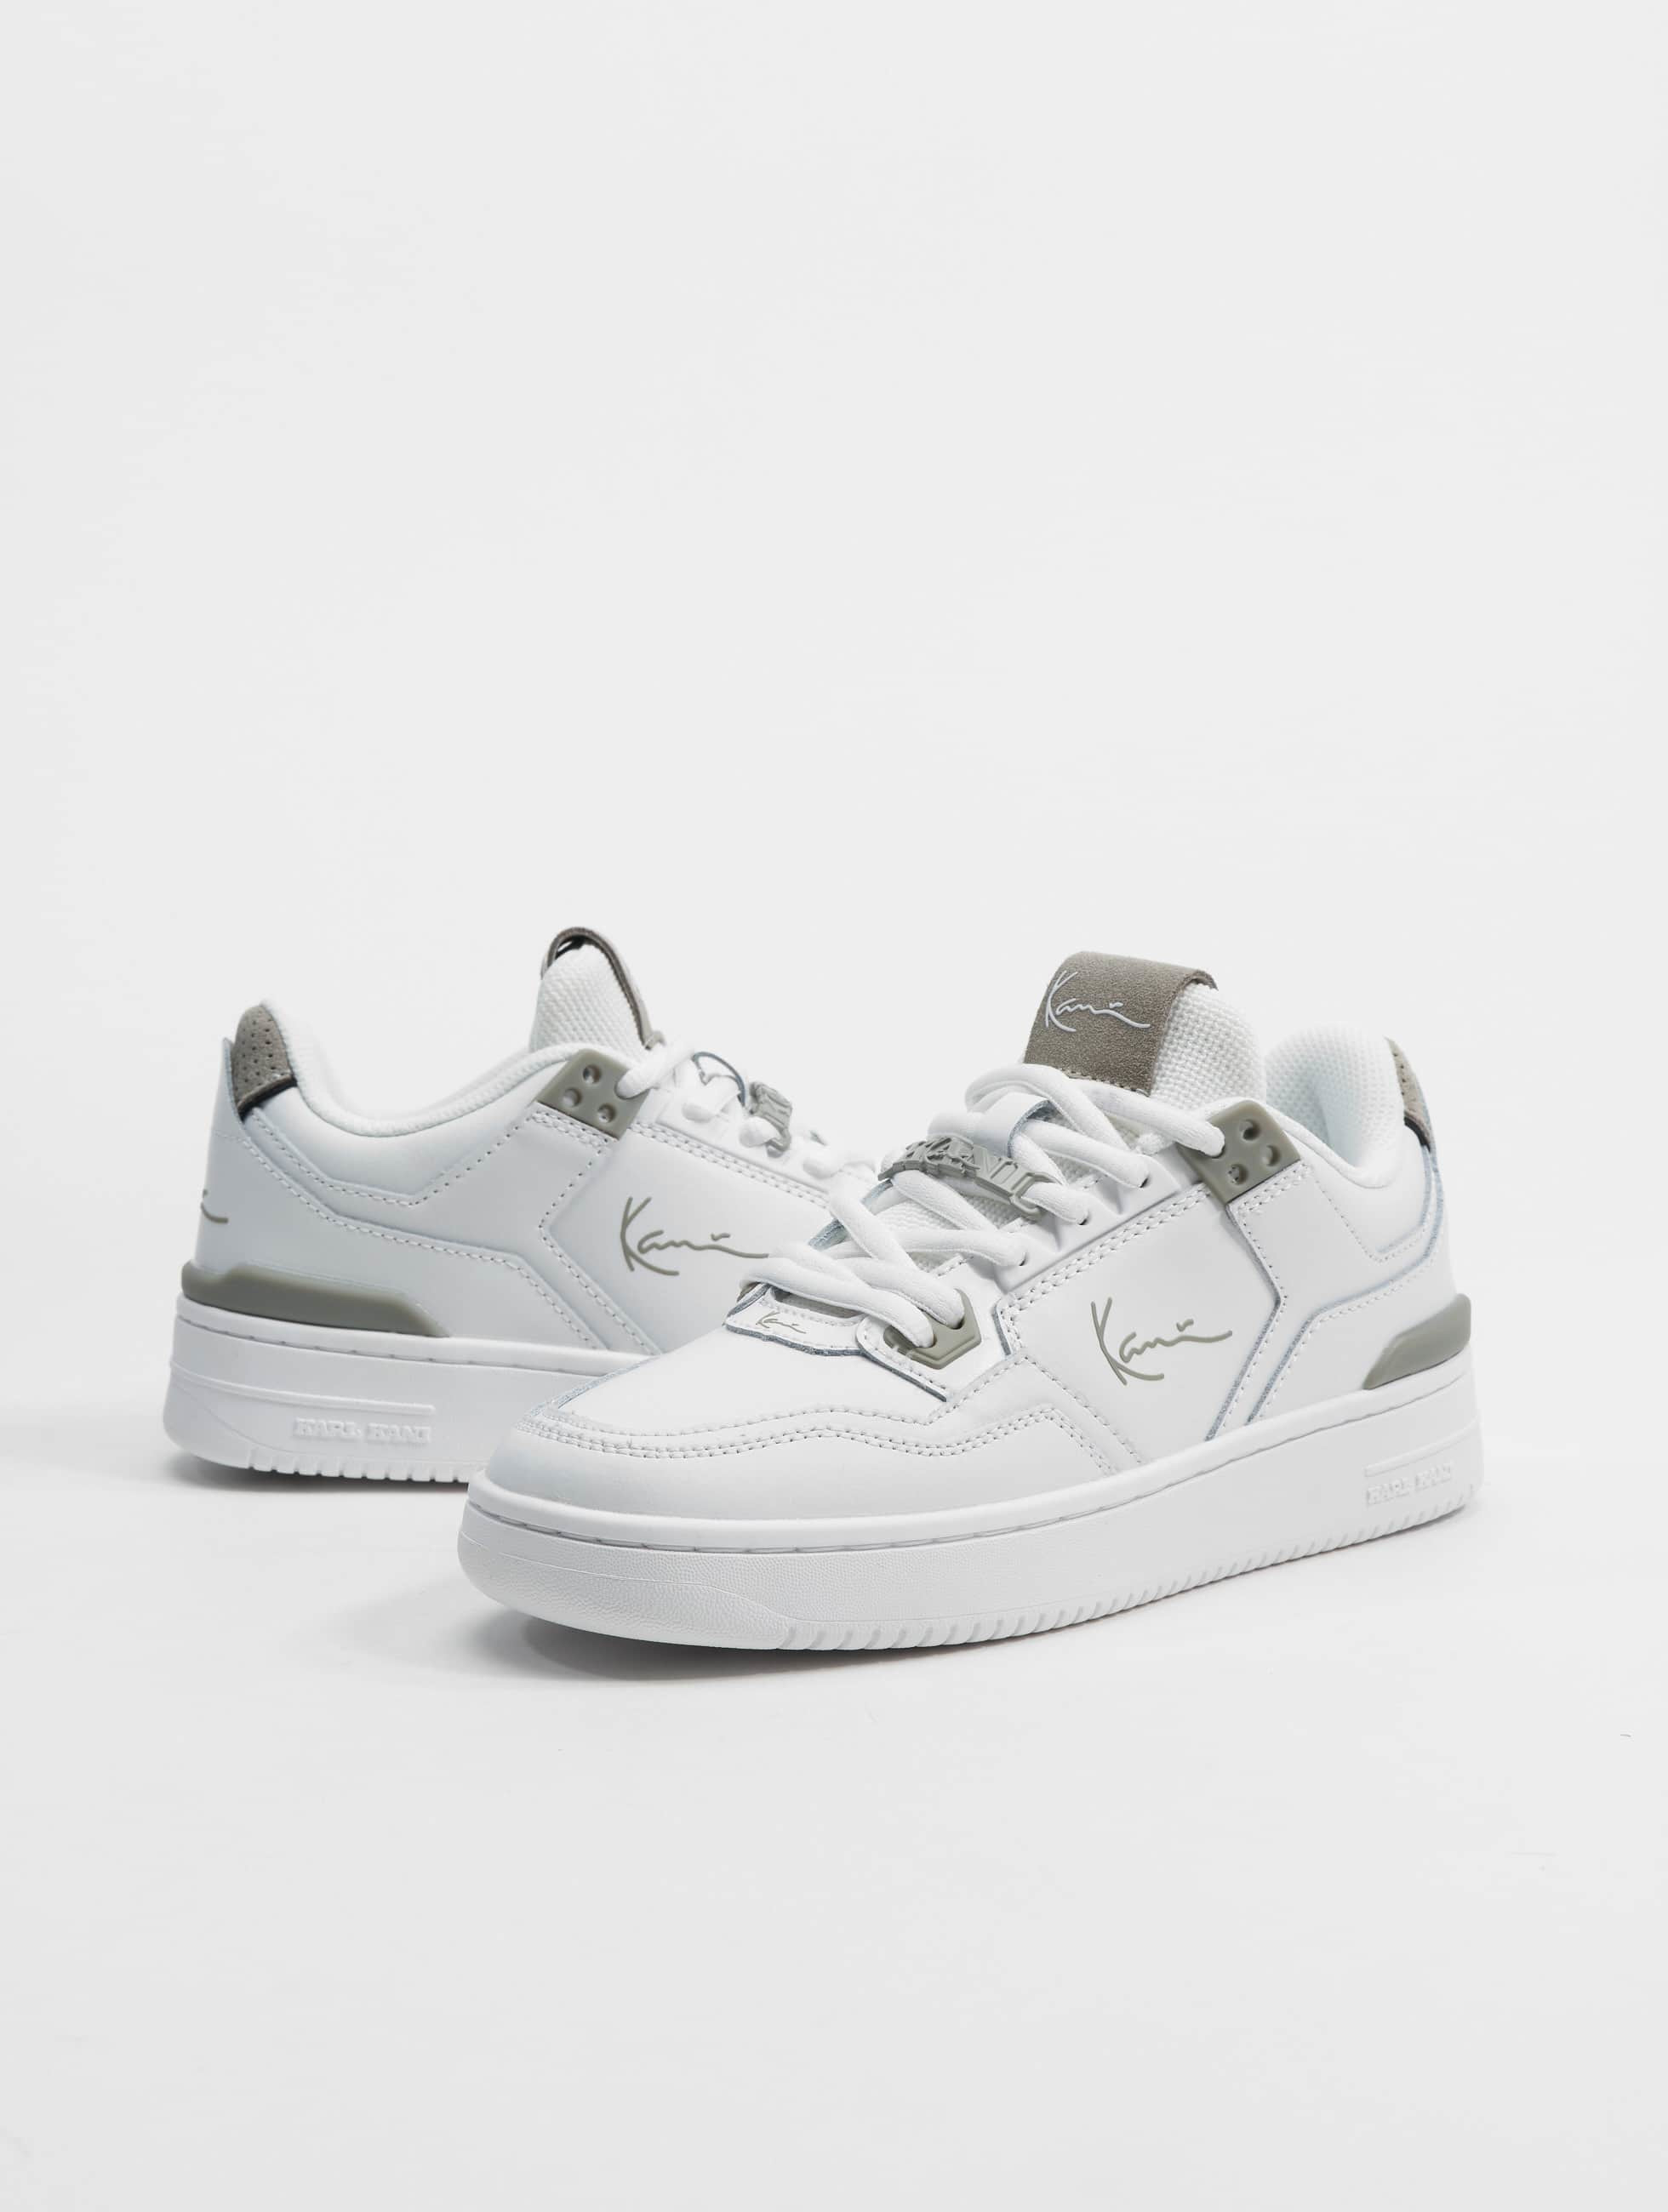 Karl Kani Shoe / Sneakers 89 LXRY in white 1031490